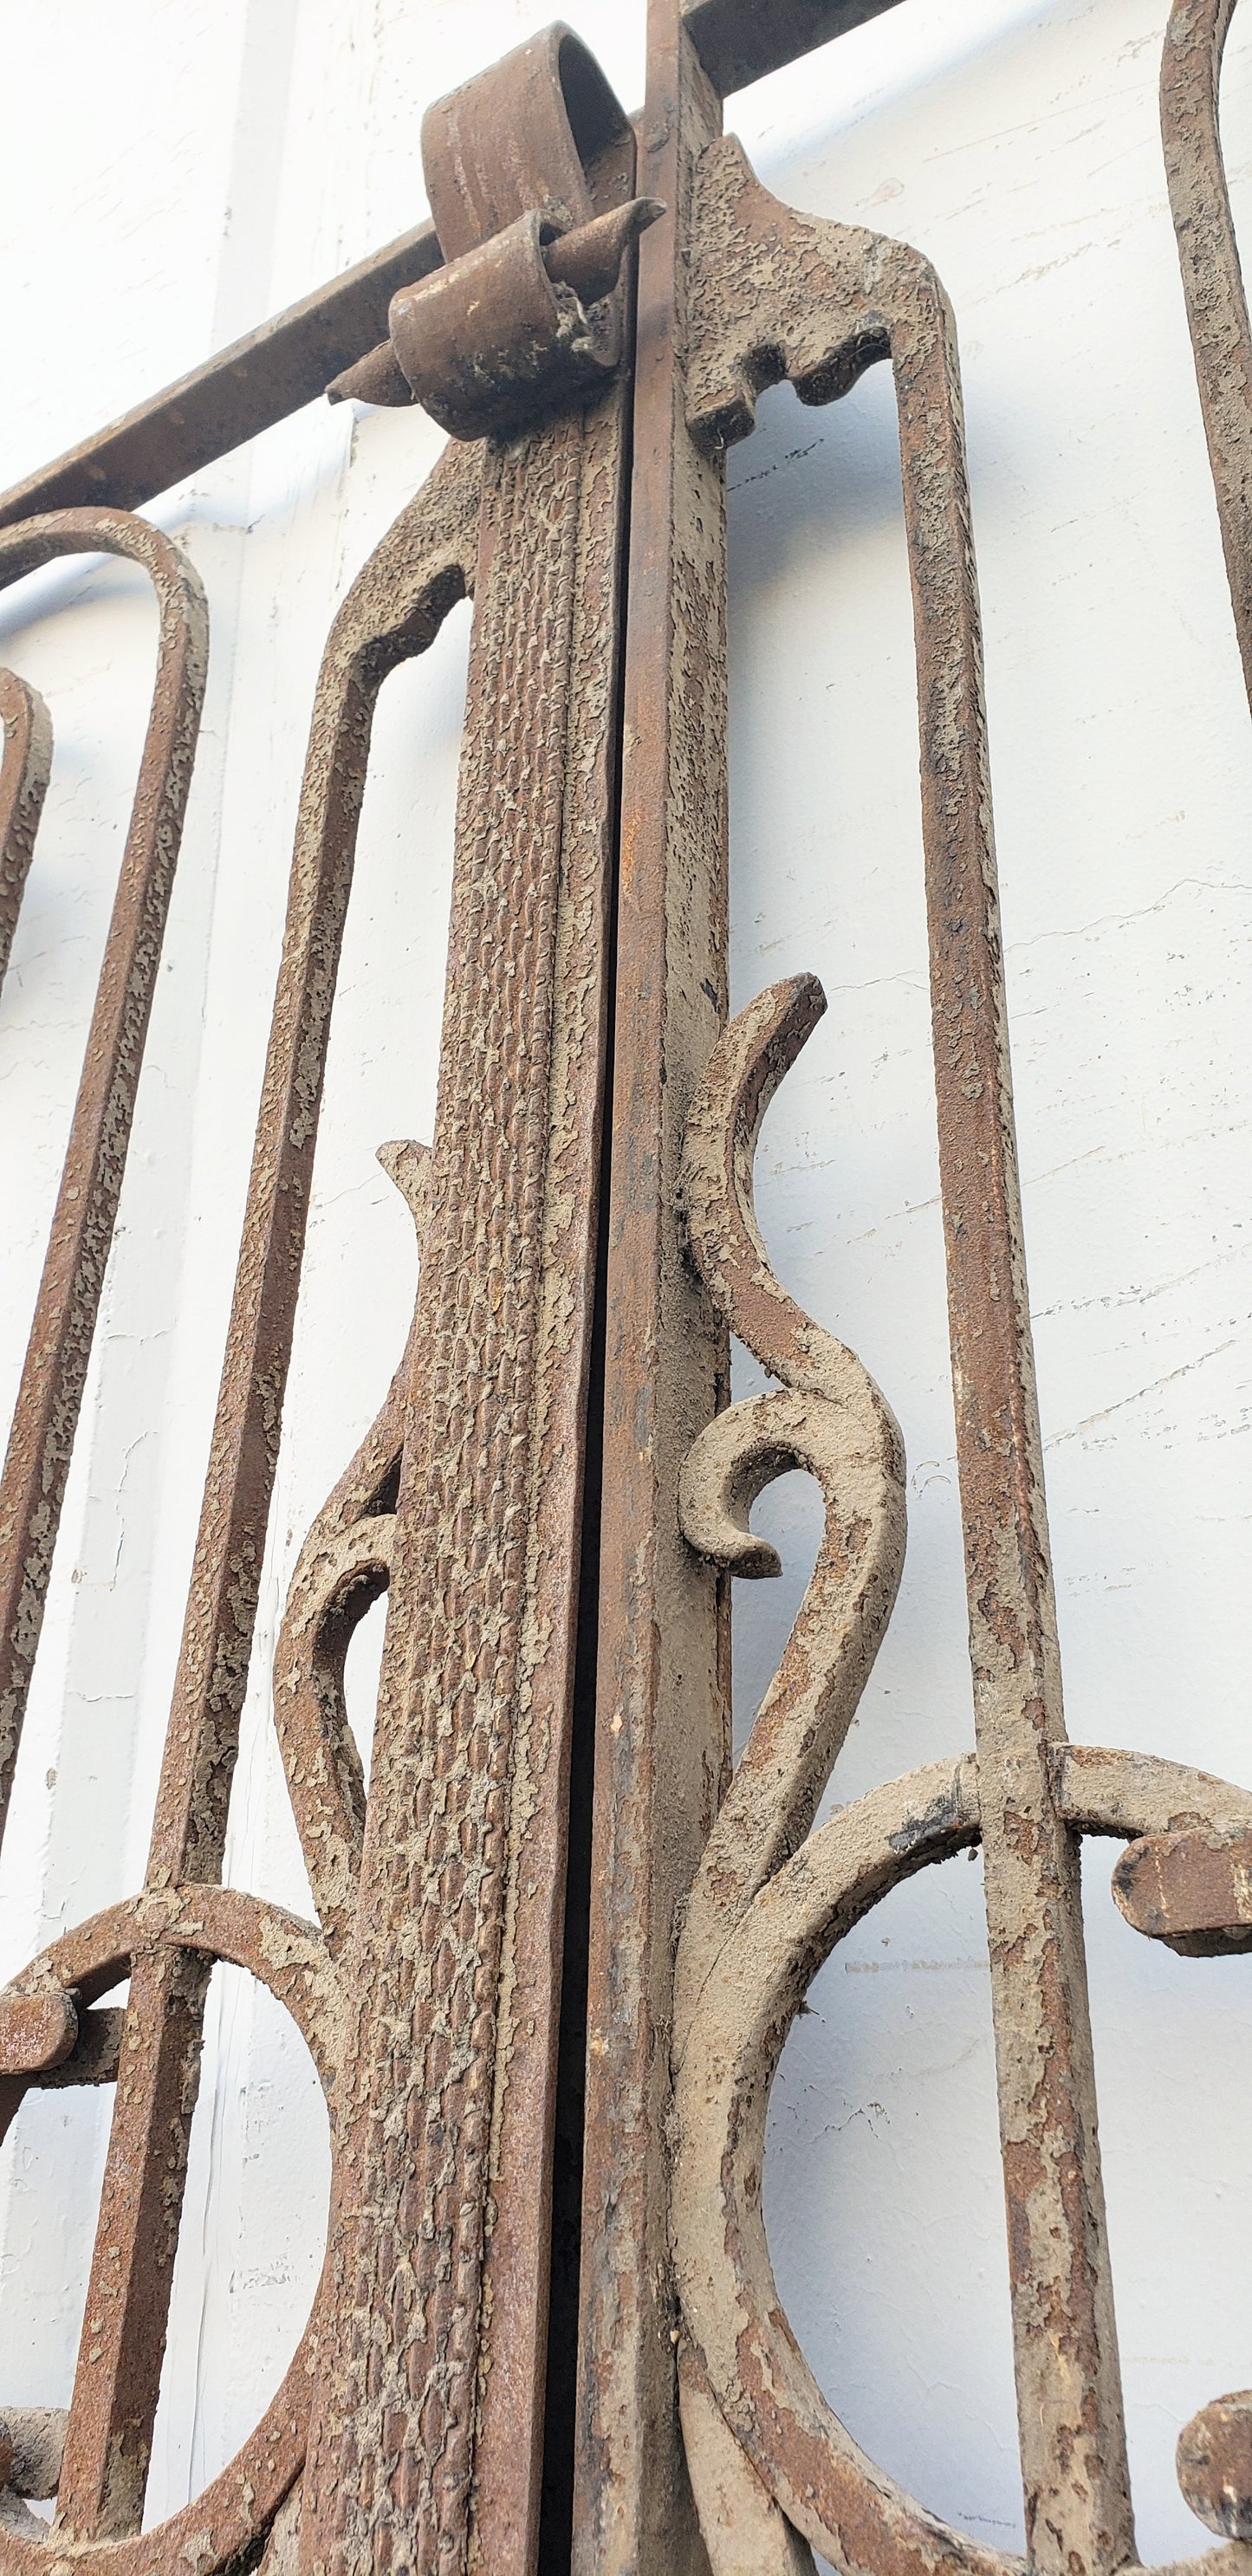 Pair of Ornate Iron Gates